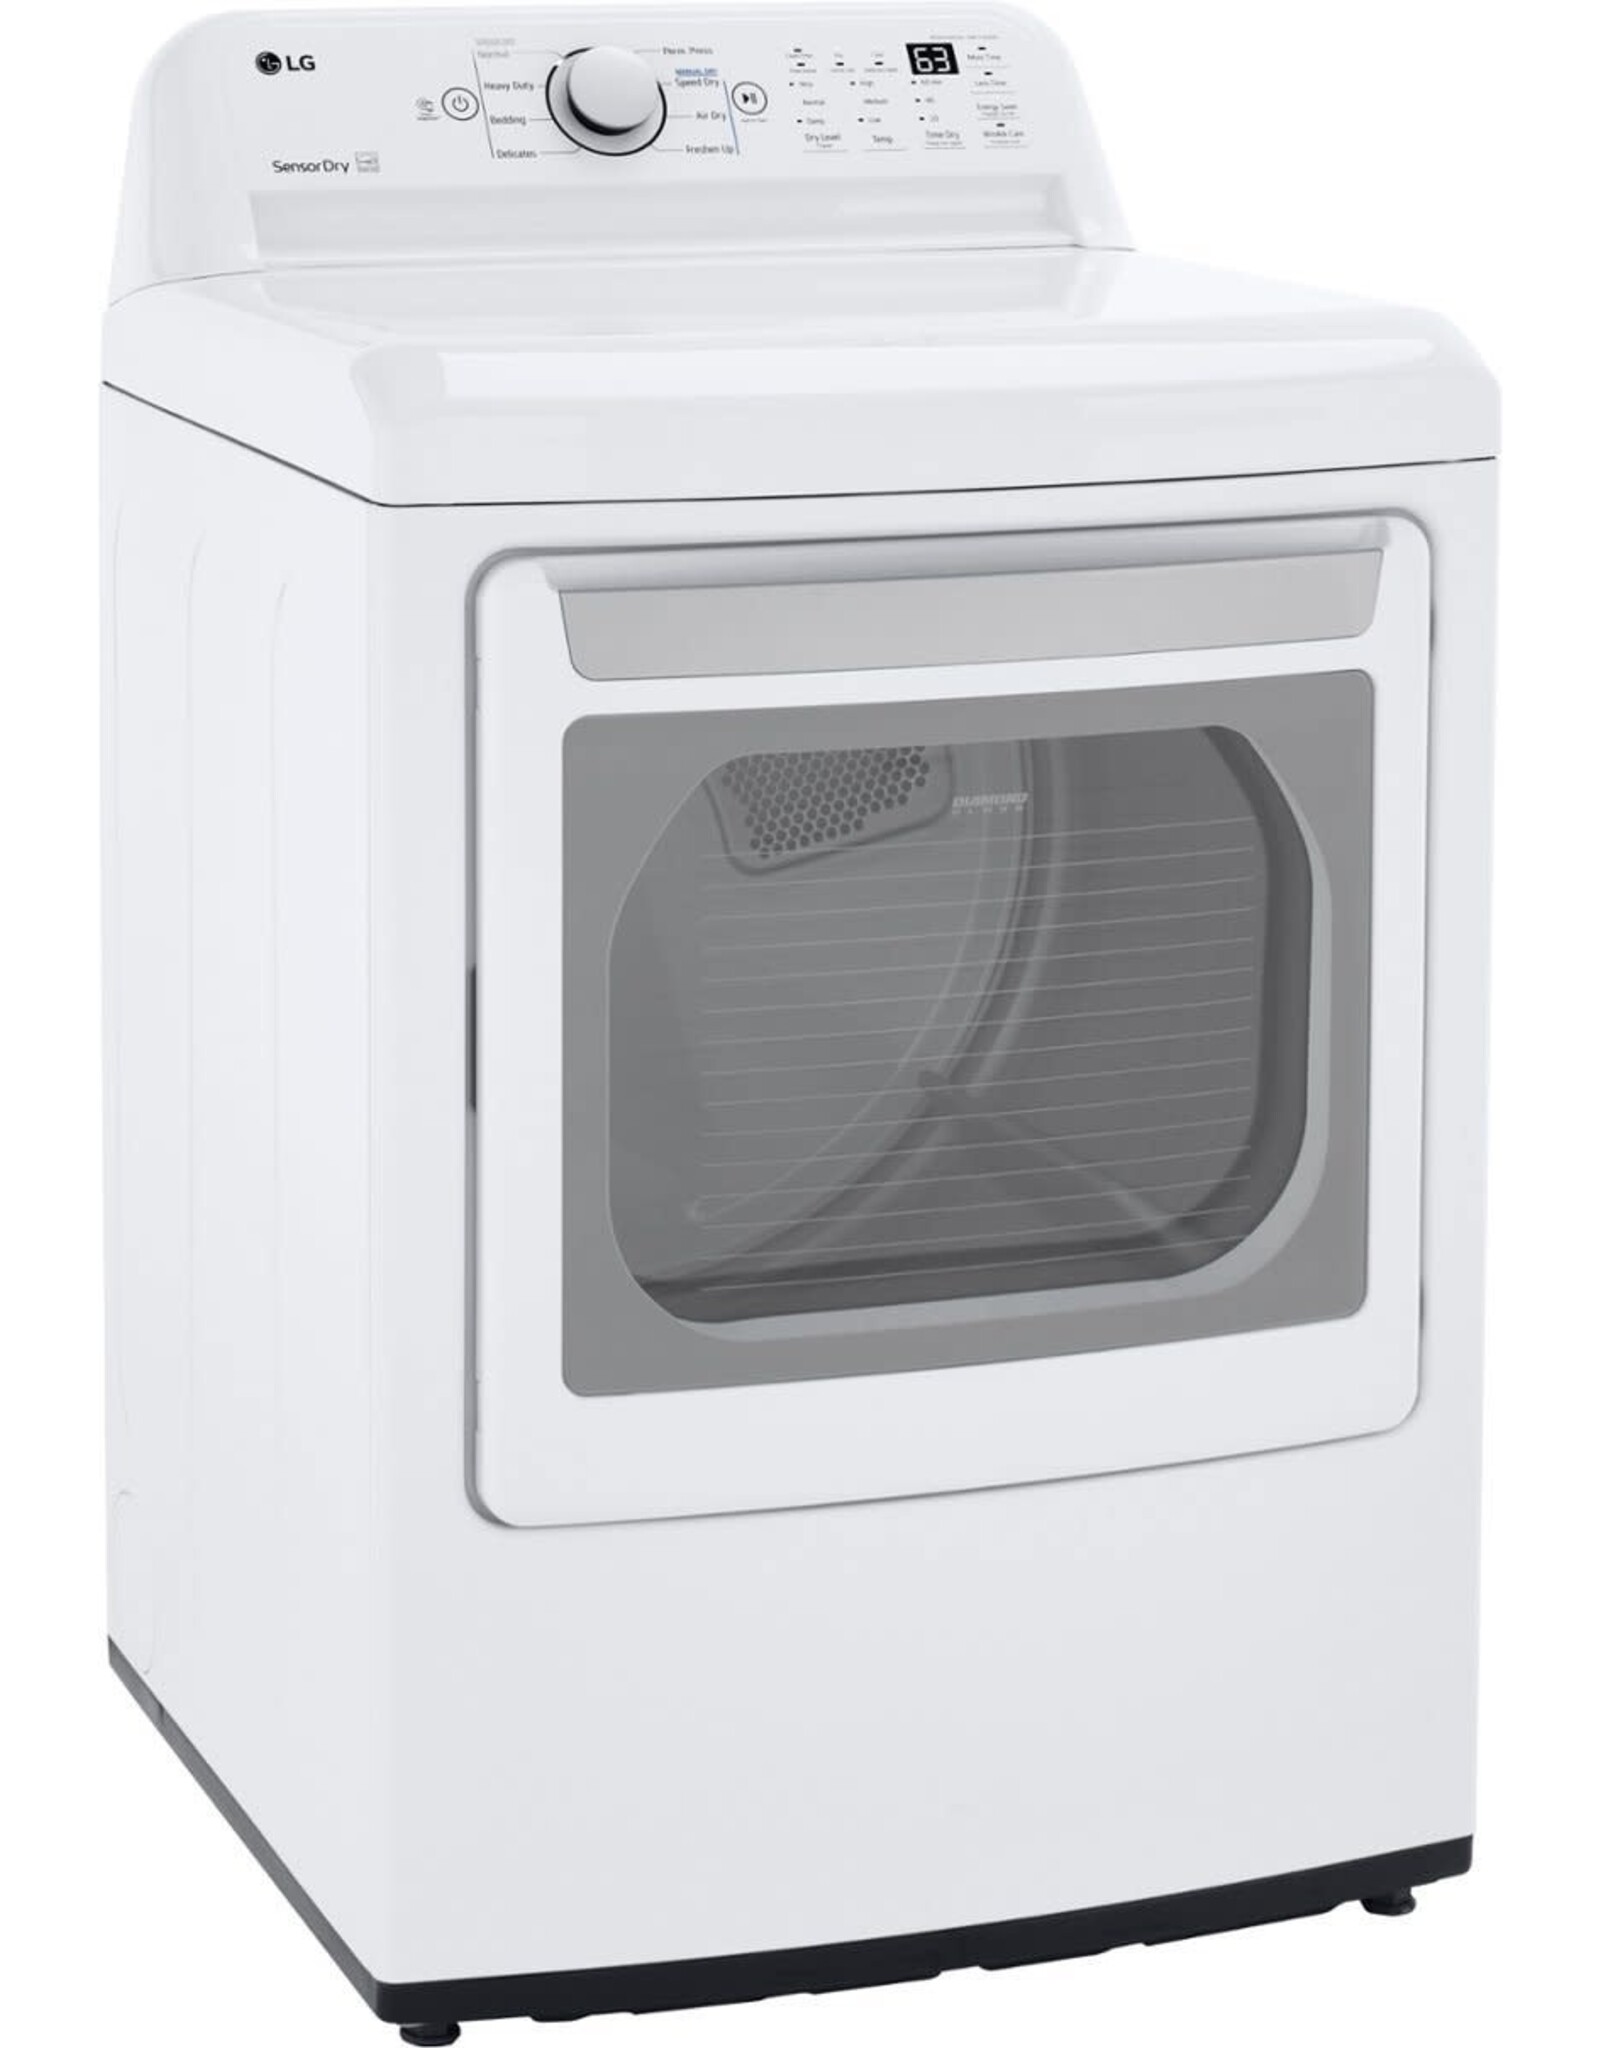 LG Electronics DLG7151W  7.3 cu. ft. White Ultra Large High Efficiency Gas Dryer